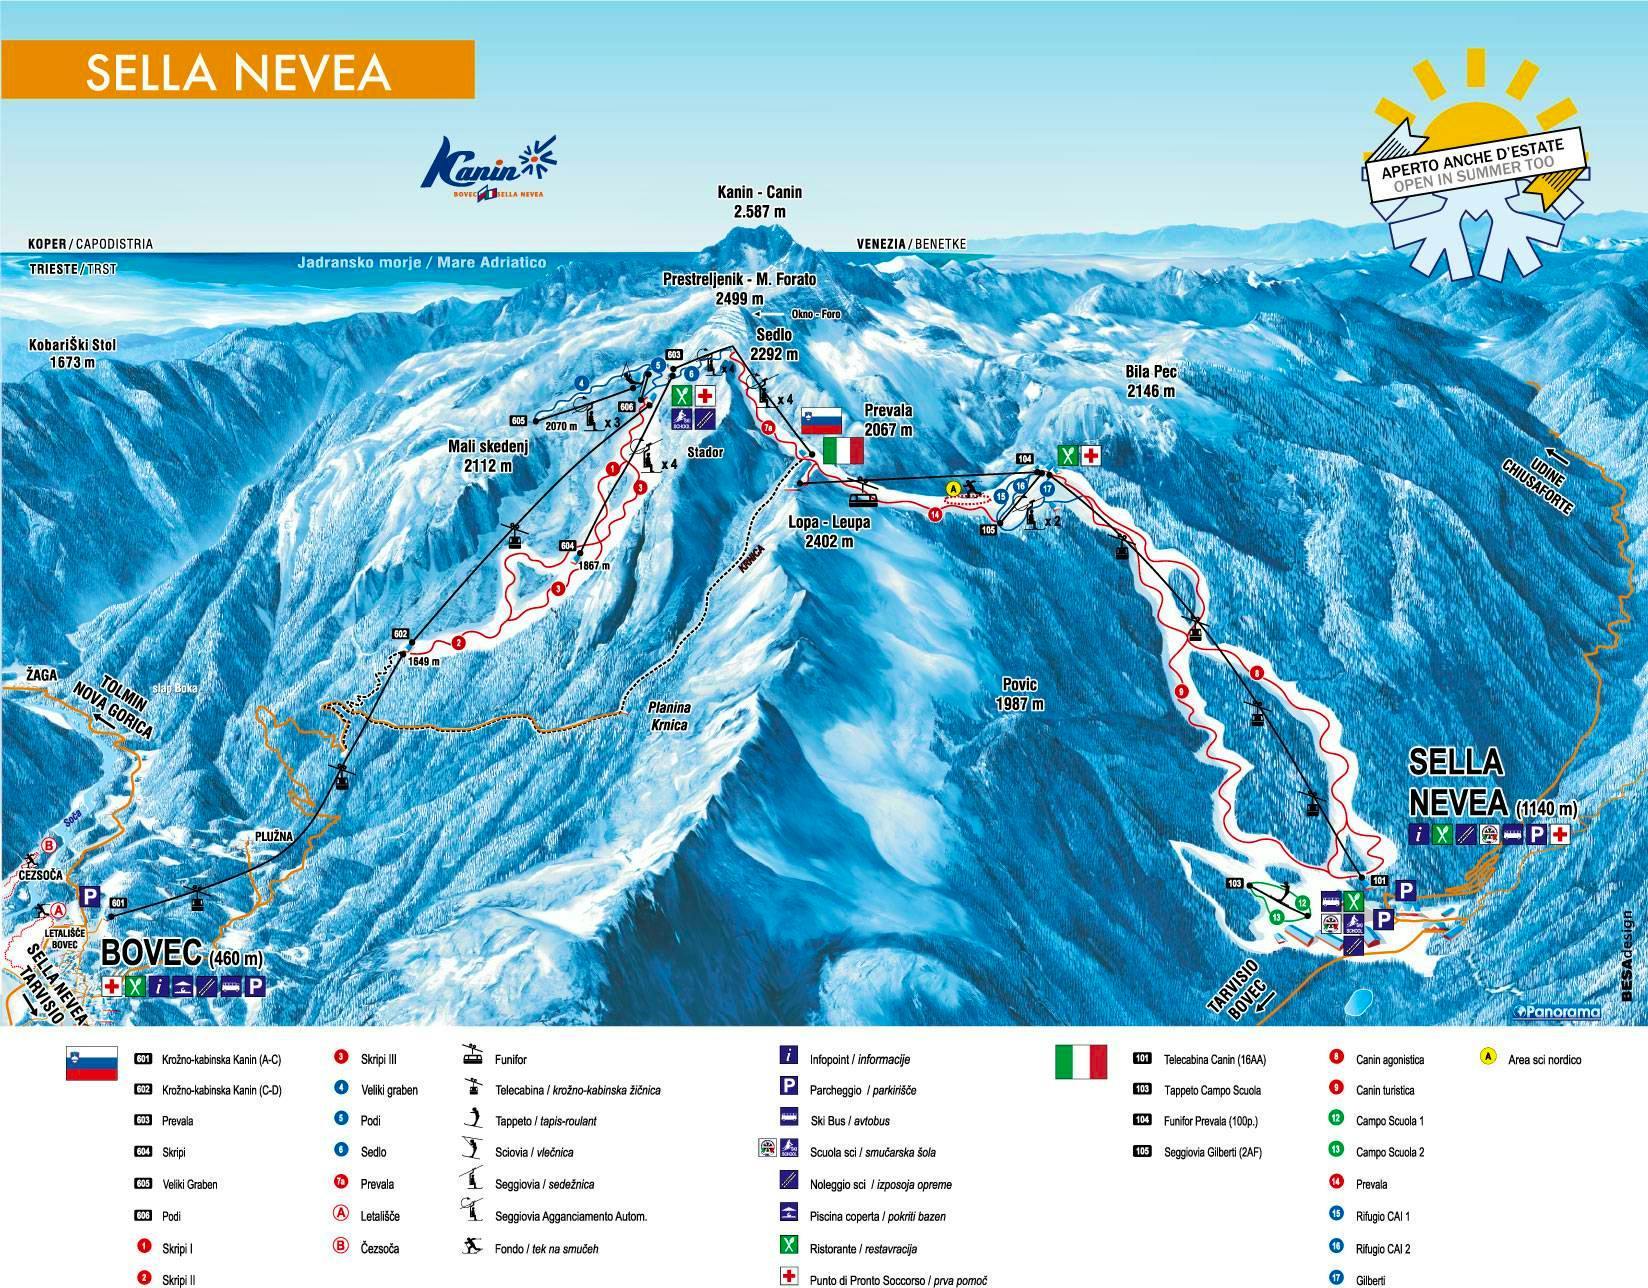 Sella Neva Resort Map